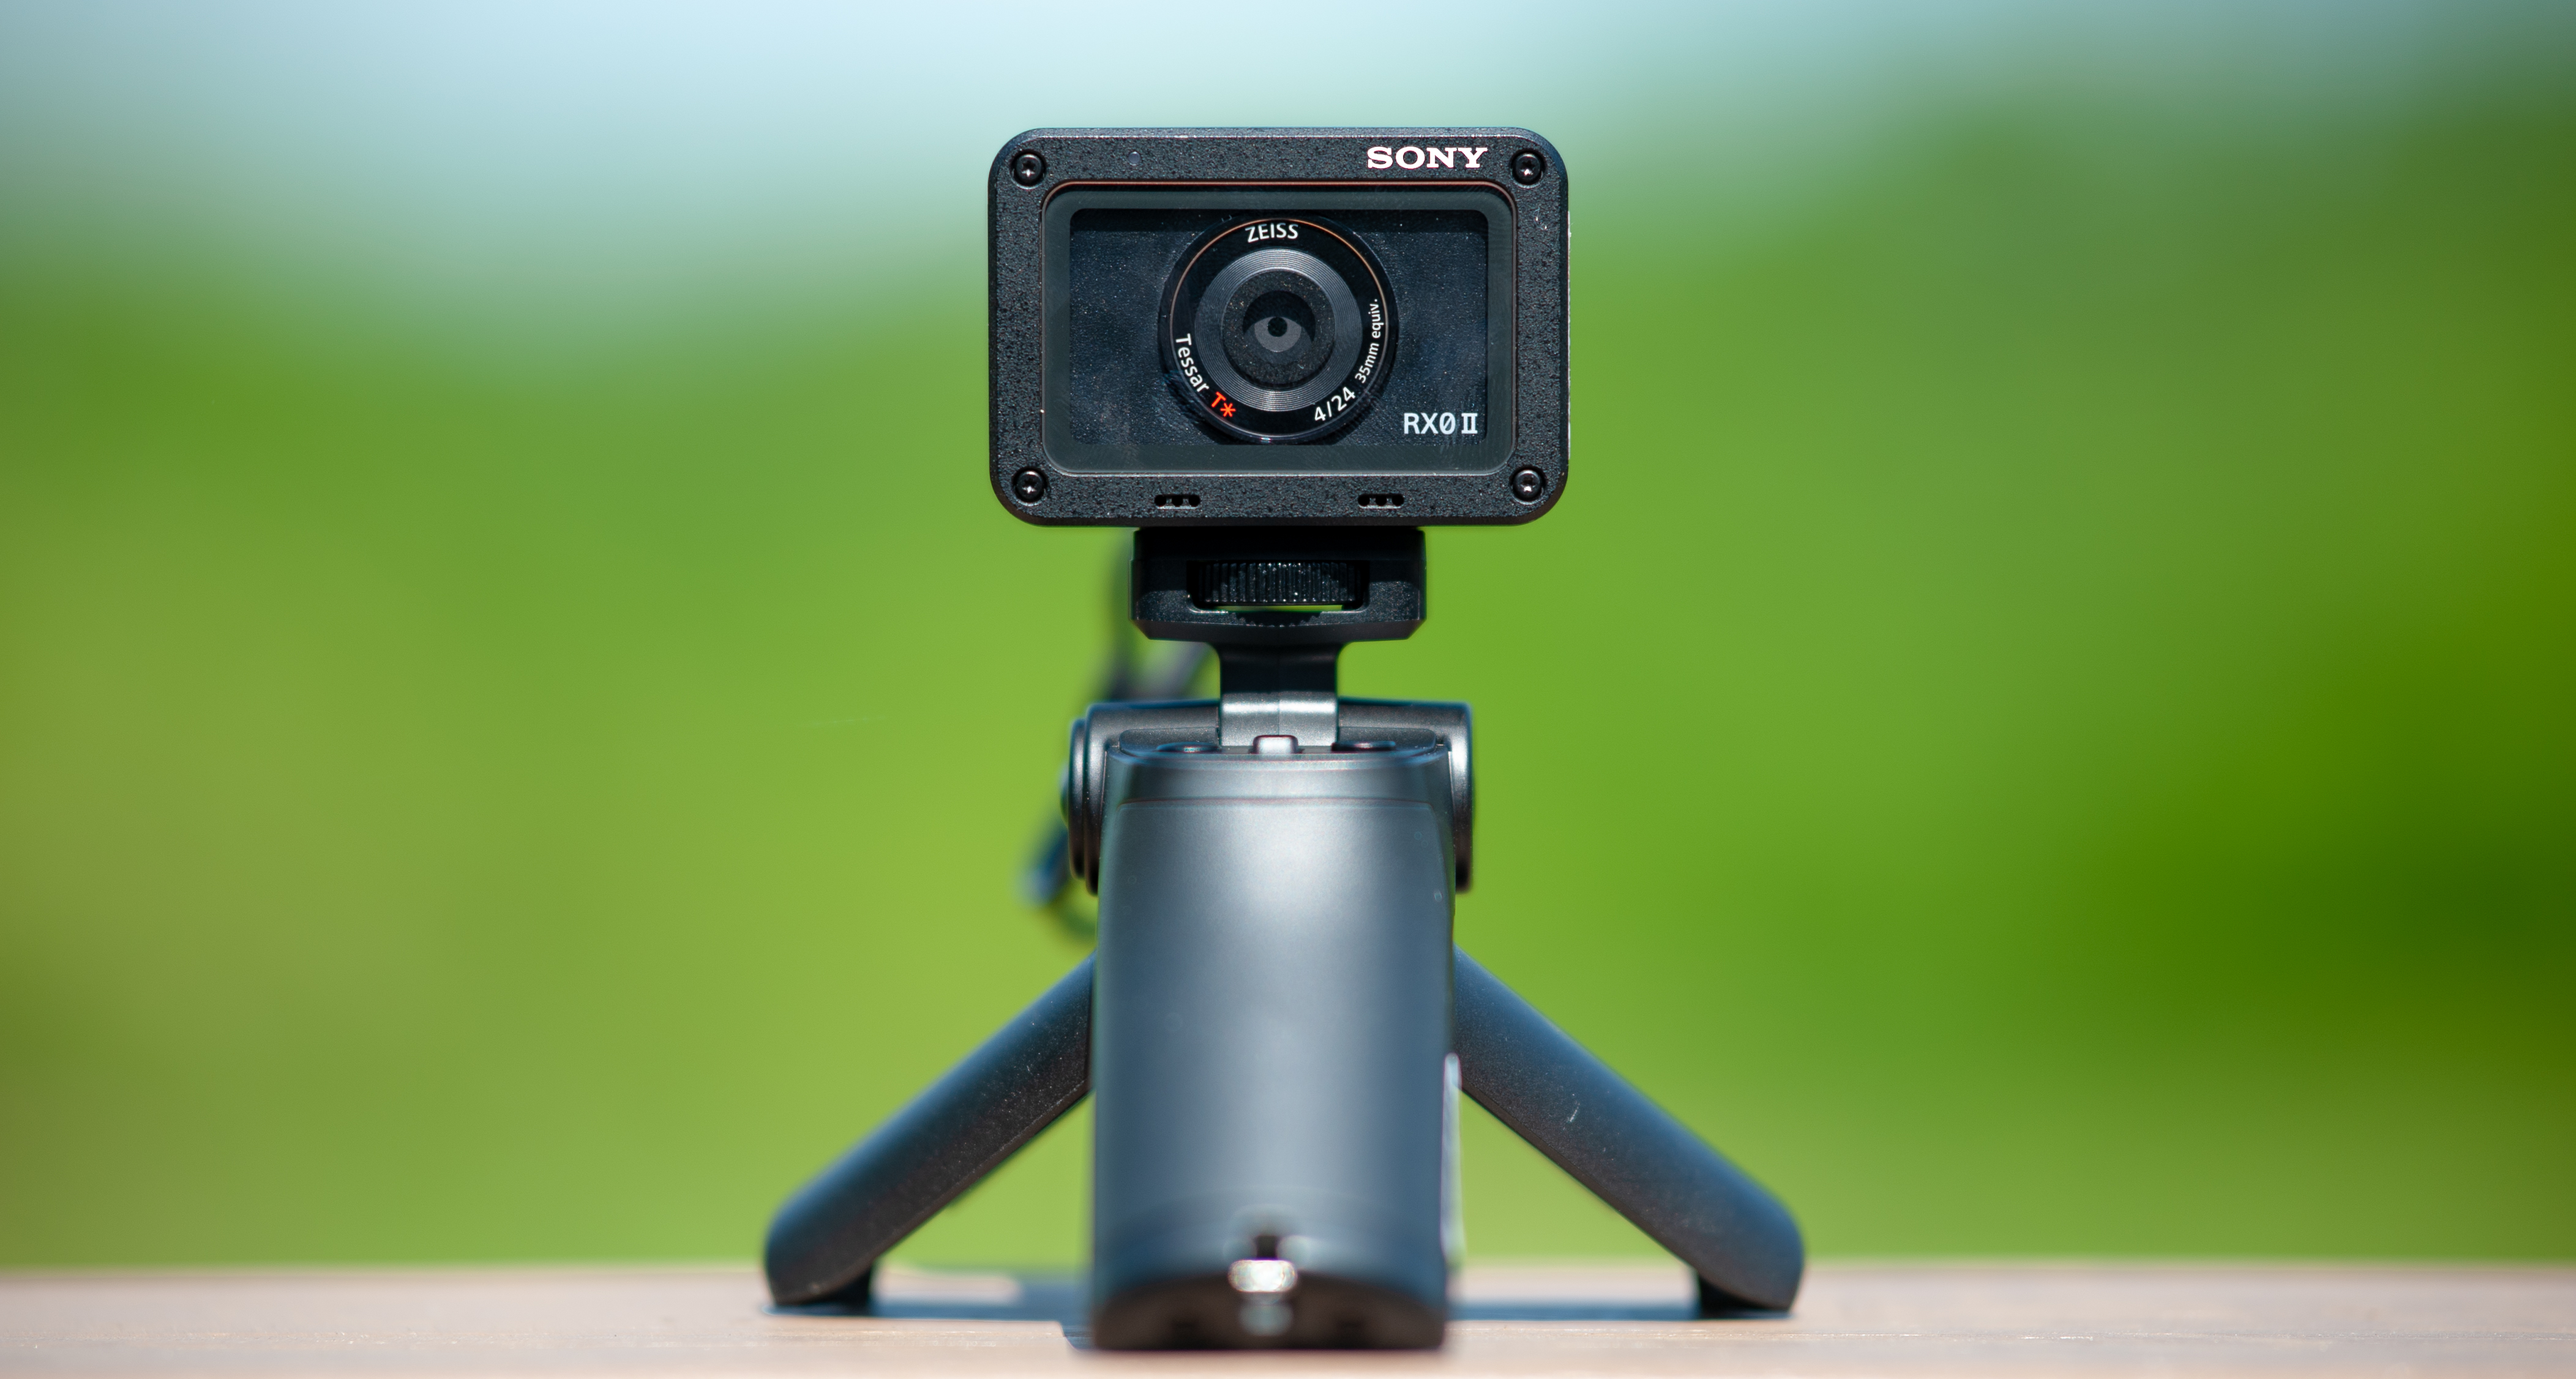 The Sony Cyber-Shot DSC-RX0 II Digital Camera Review